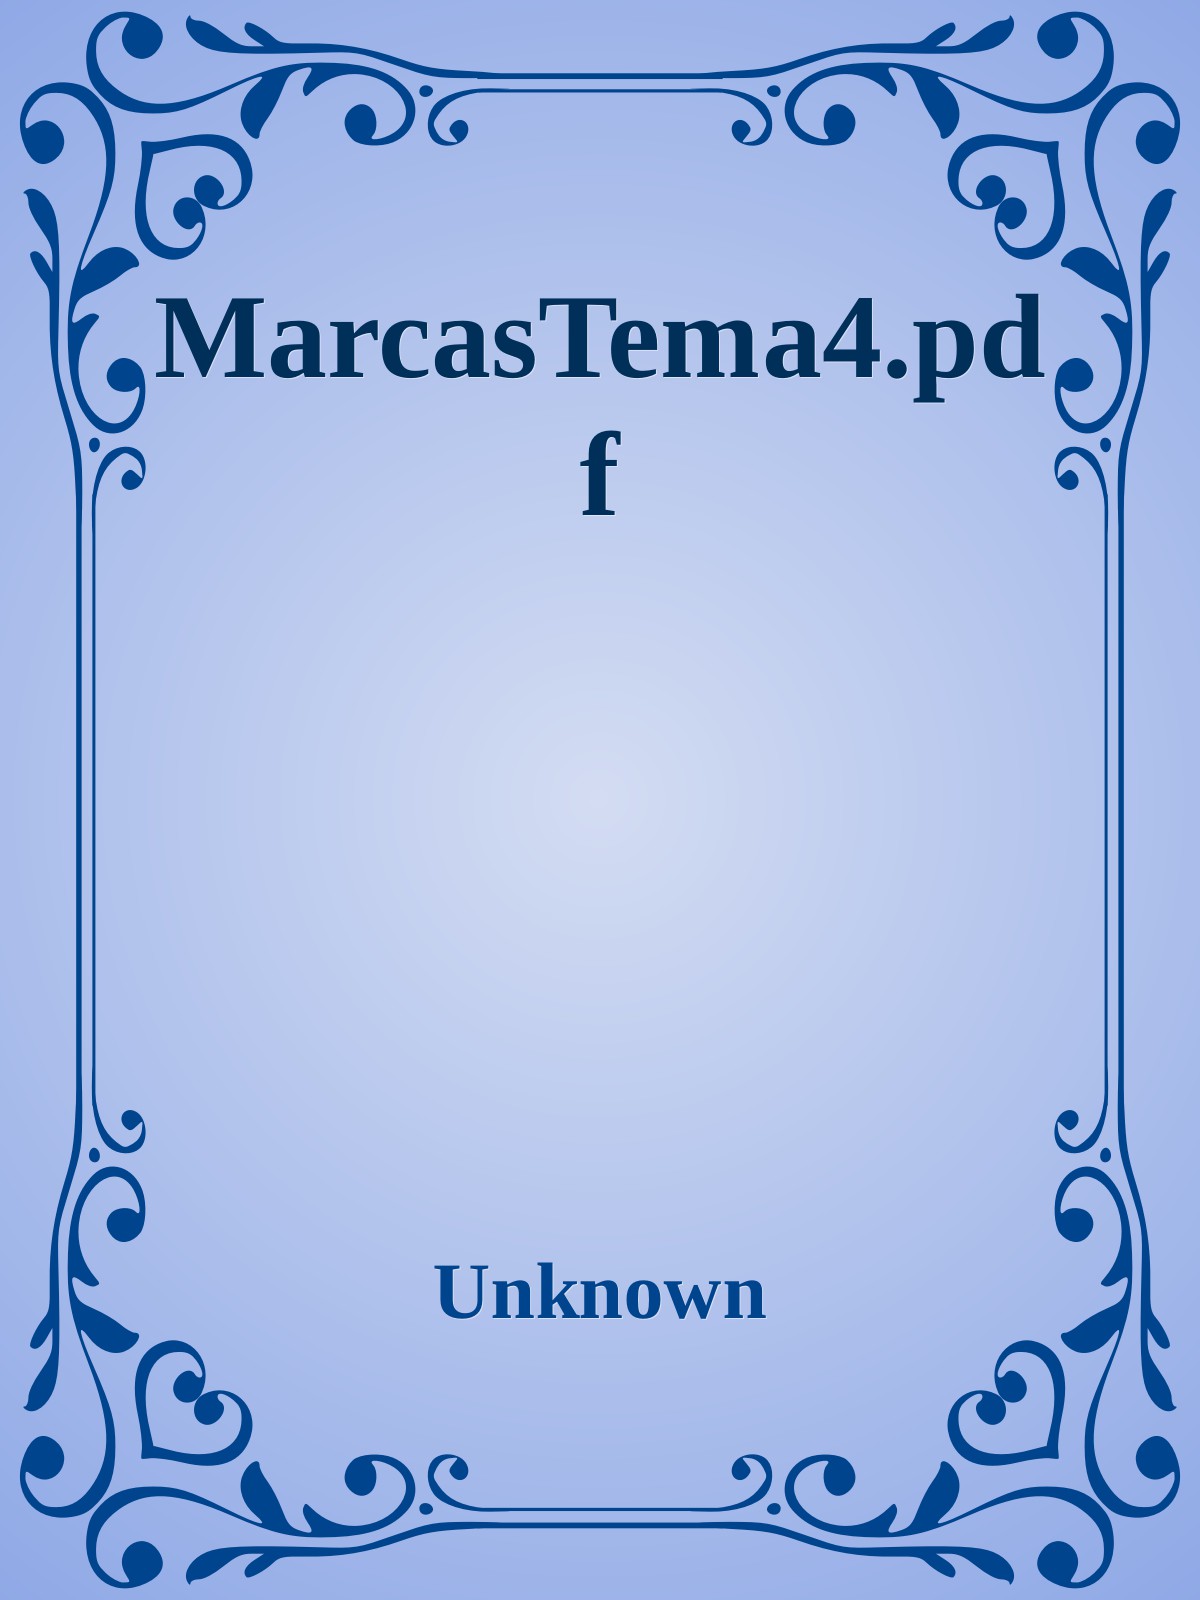 MarcasTema4.pdf